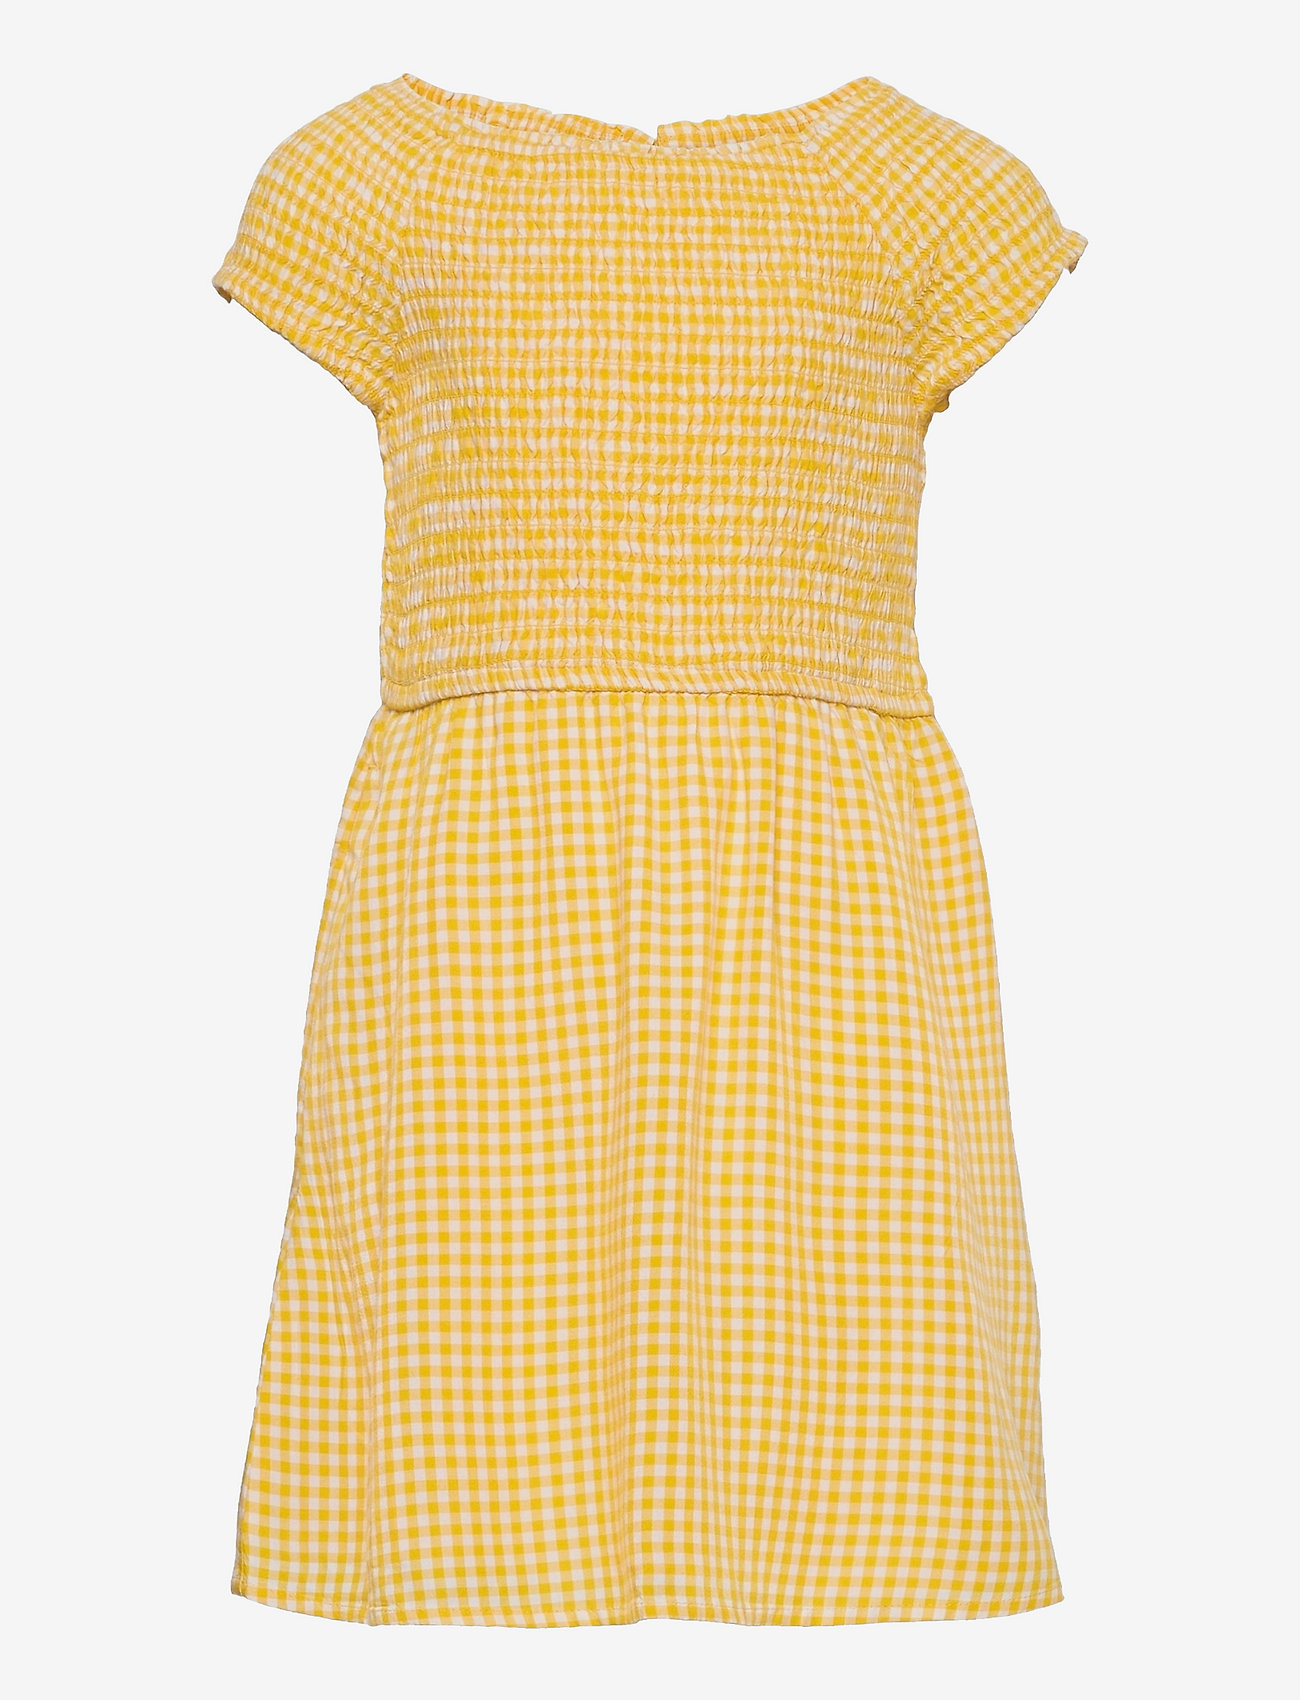 Abercrombie & Fitch - kids GIRLS DRESSES - short-sleeved casual dresses - light yellow patt - 0